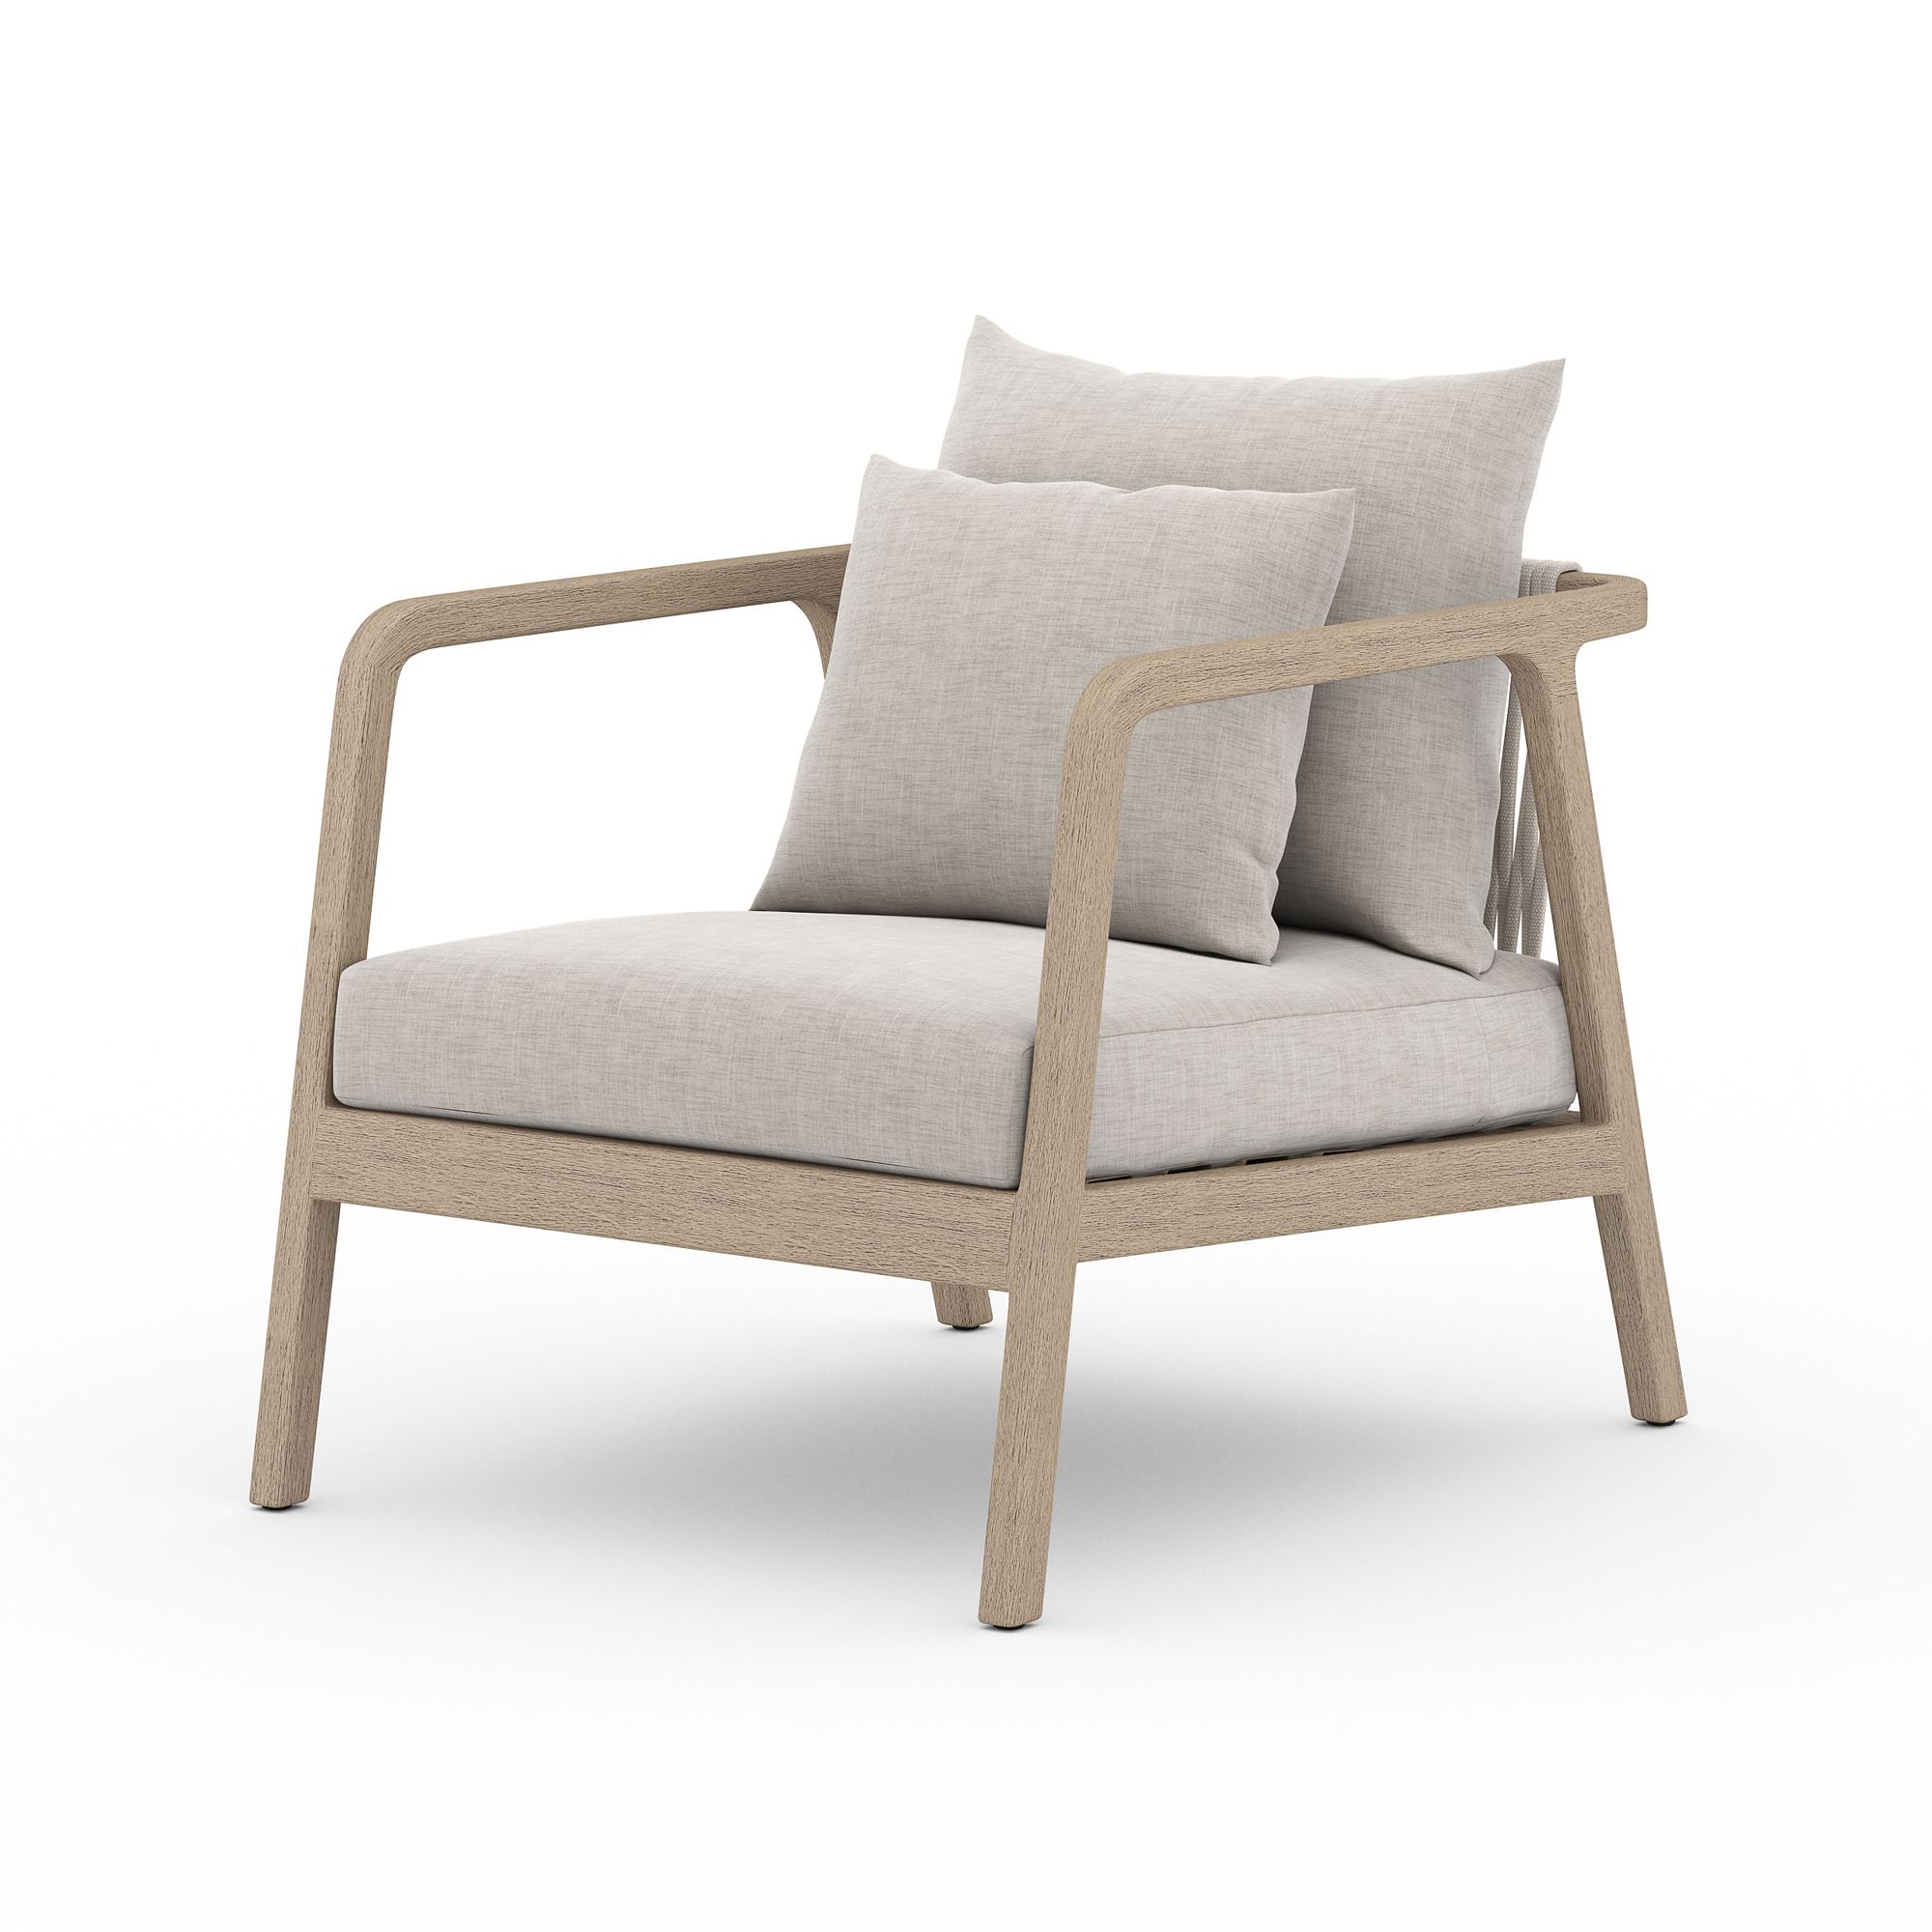 Rope & Wood Outdoor Chair | West Elm